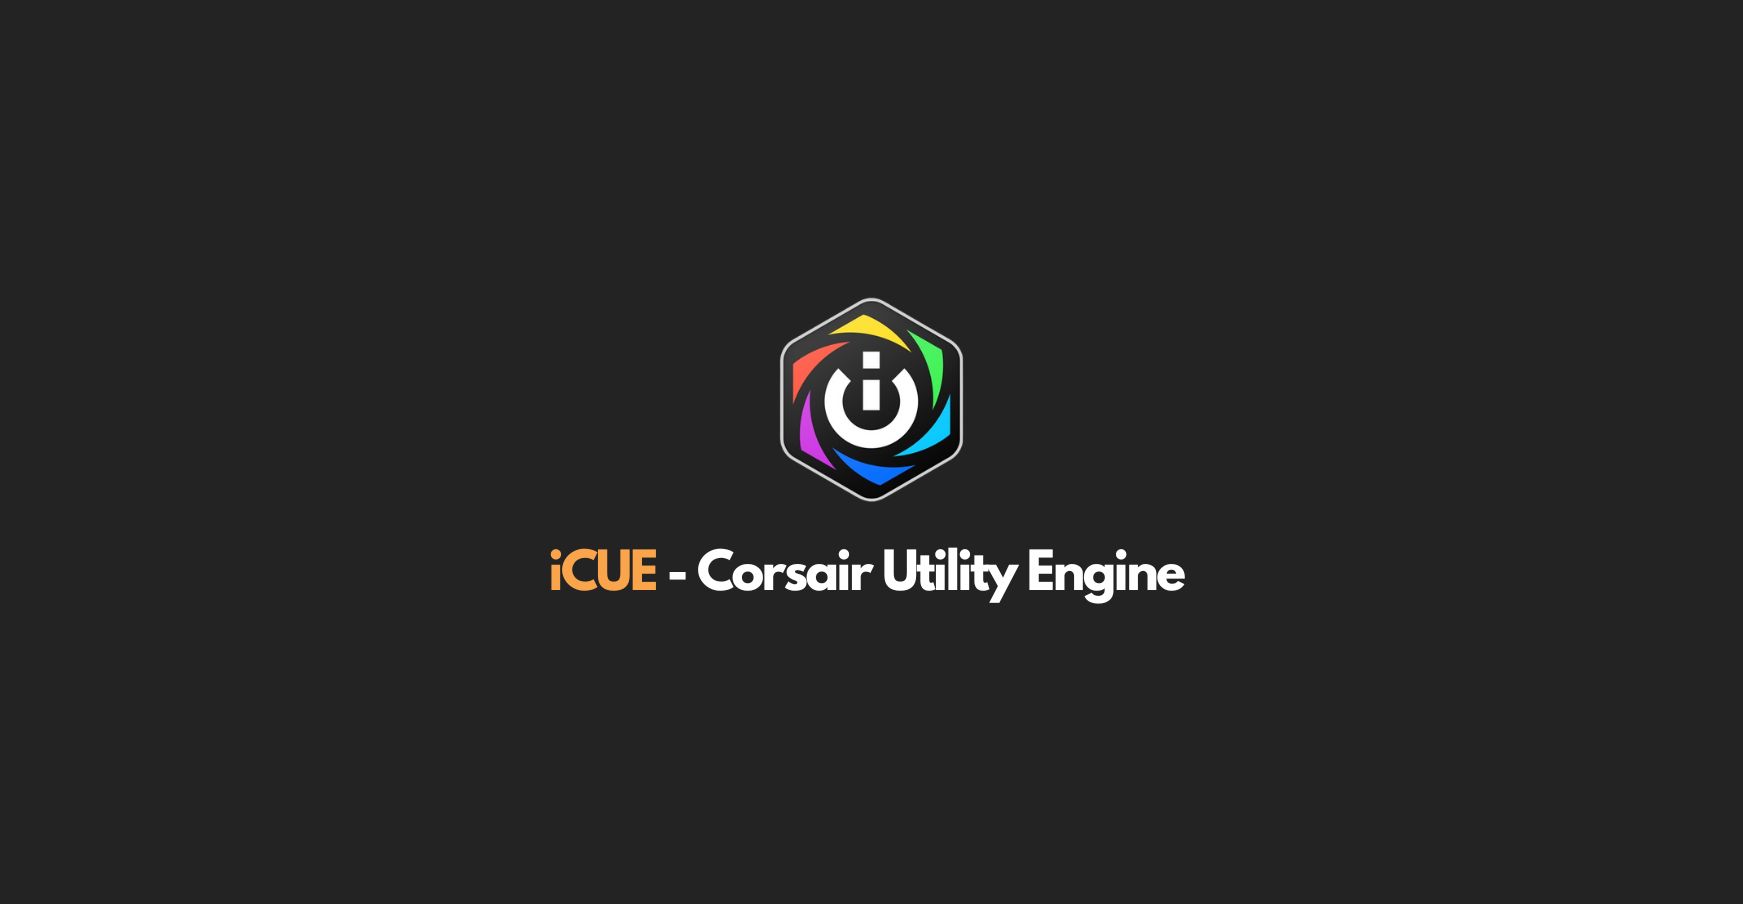 iCUE - Corsair Utility Engine